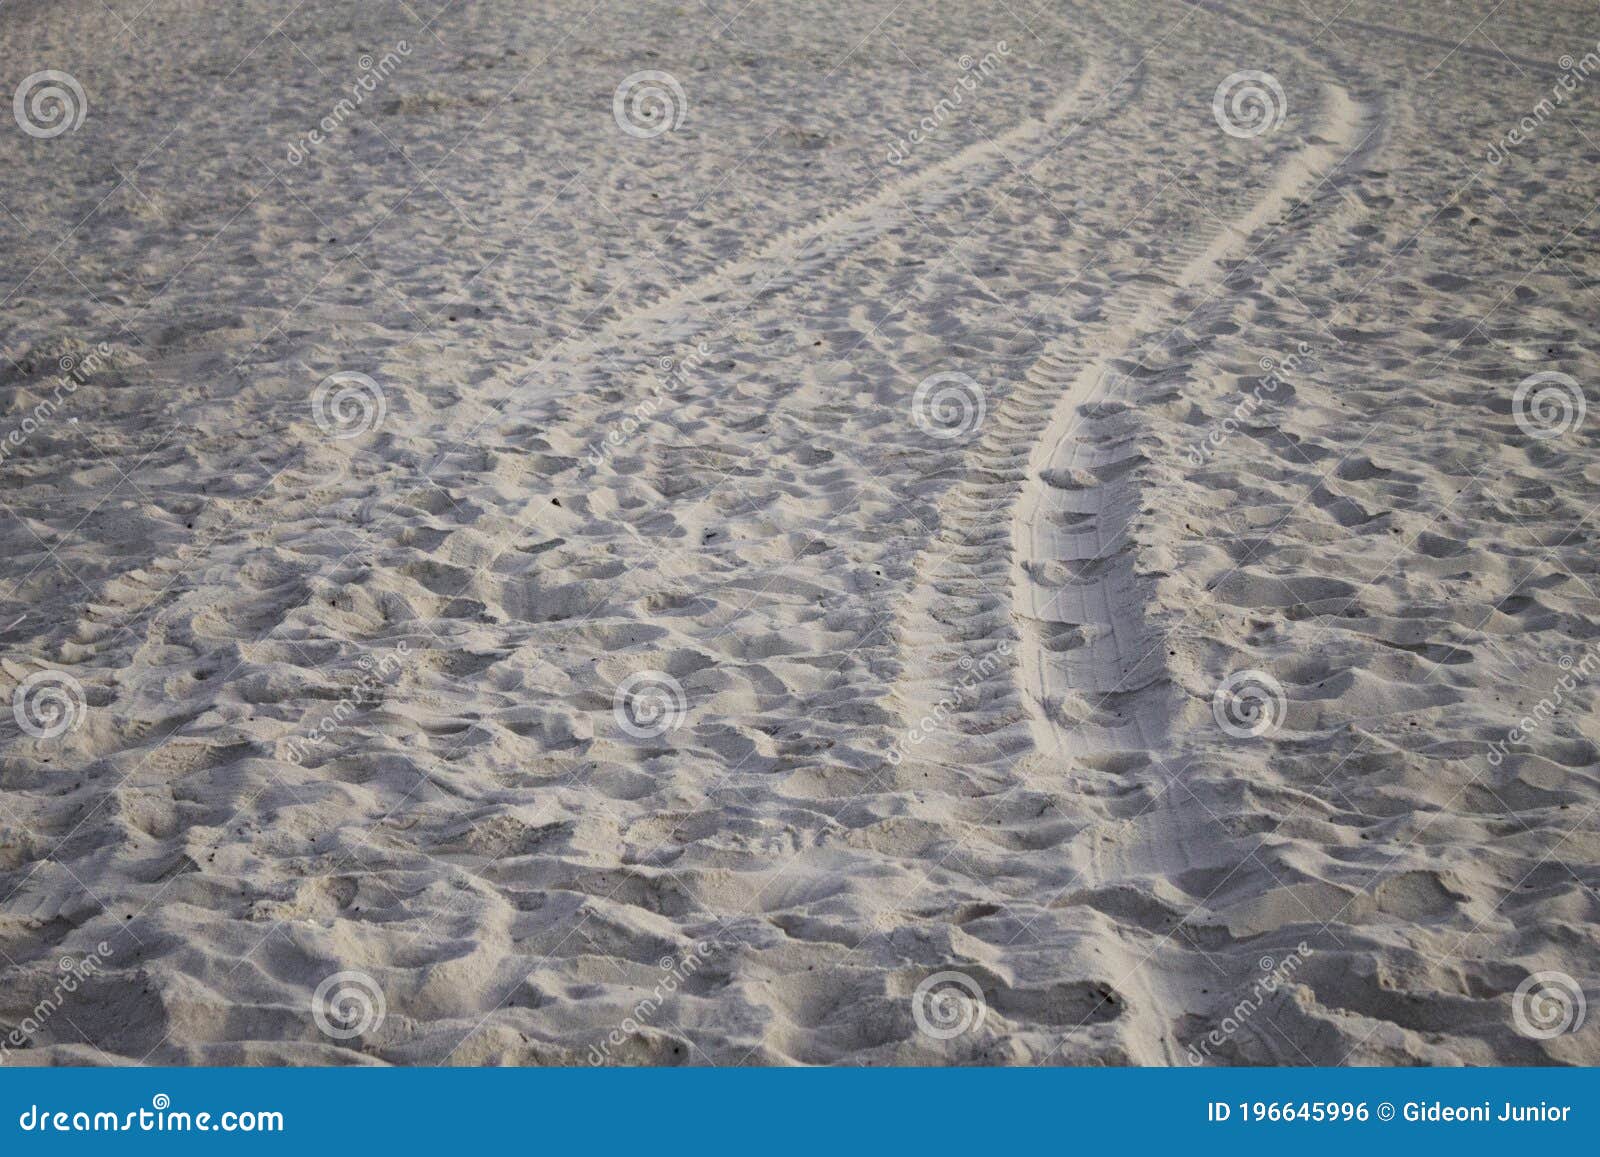 traces in the sand of rio de janeiro